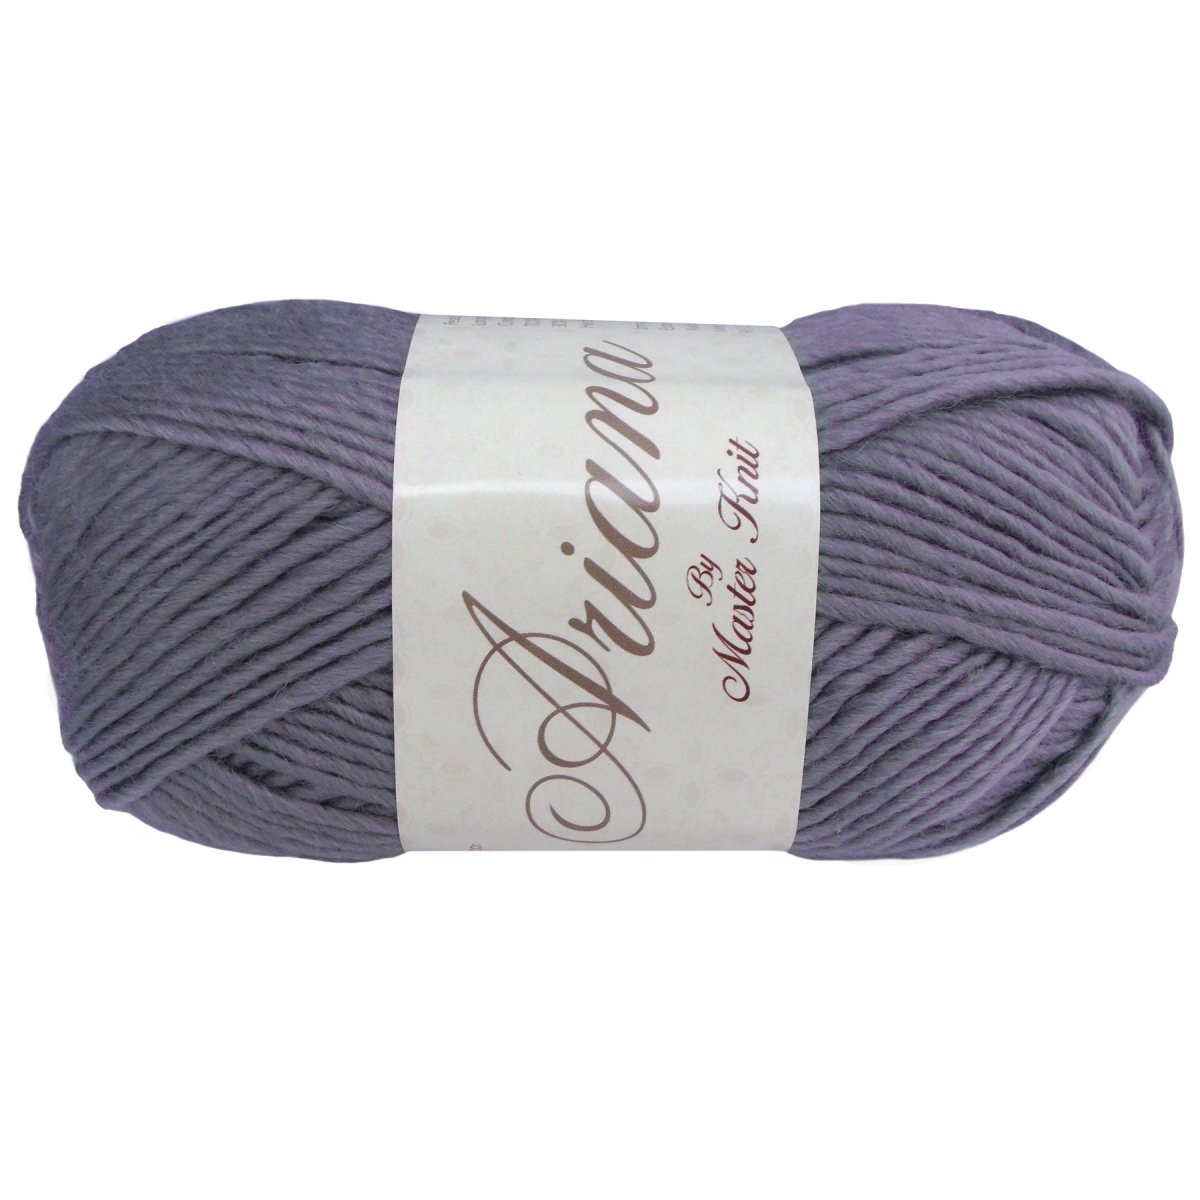 ARIANA - Aran - Crochetstores9510-194